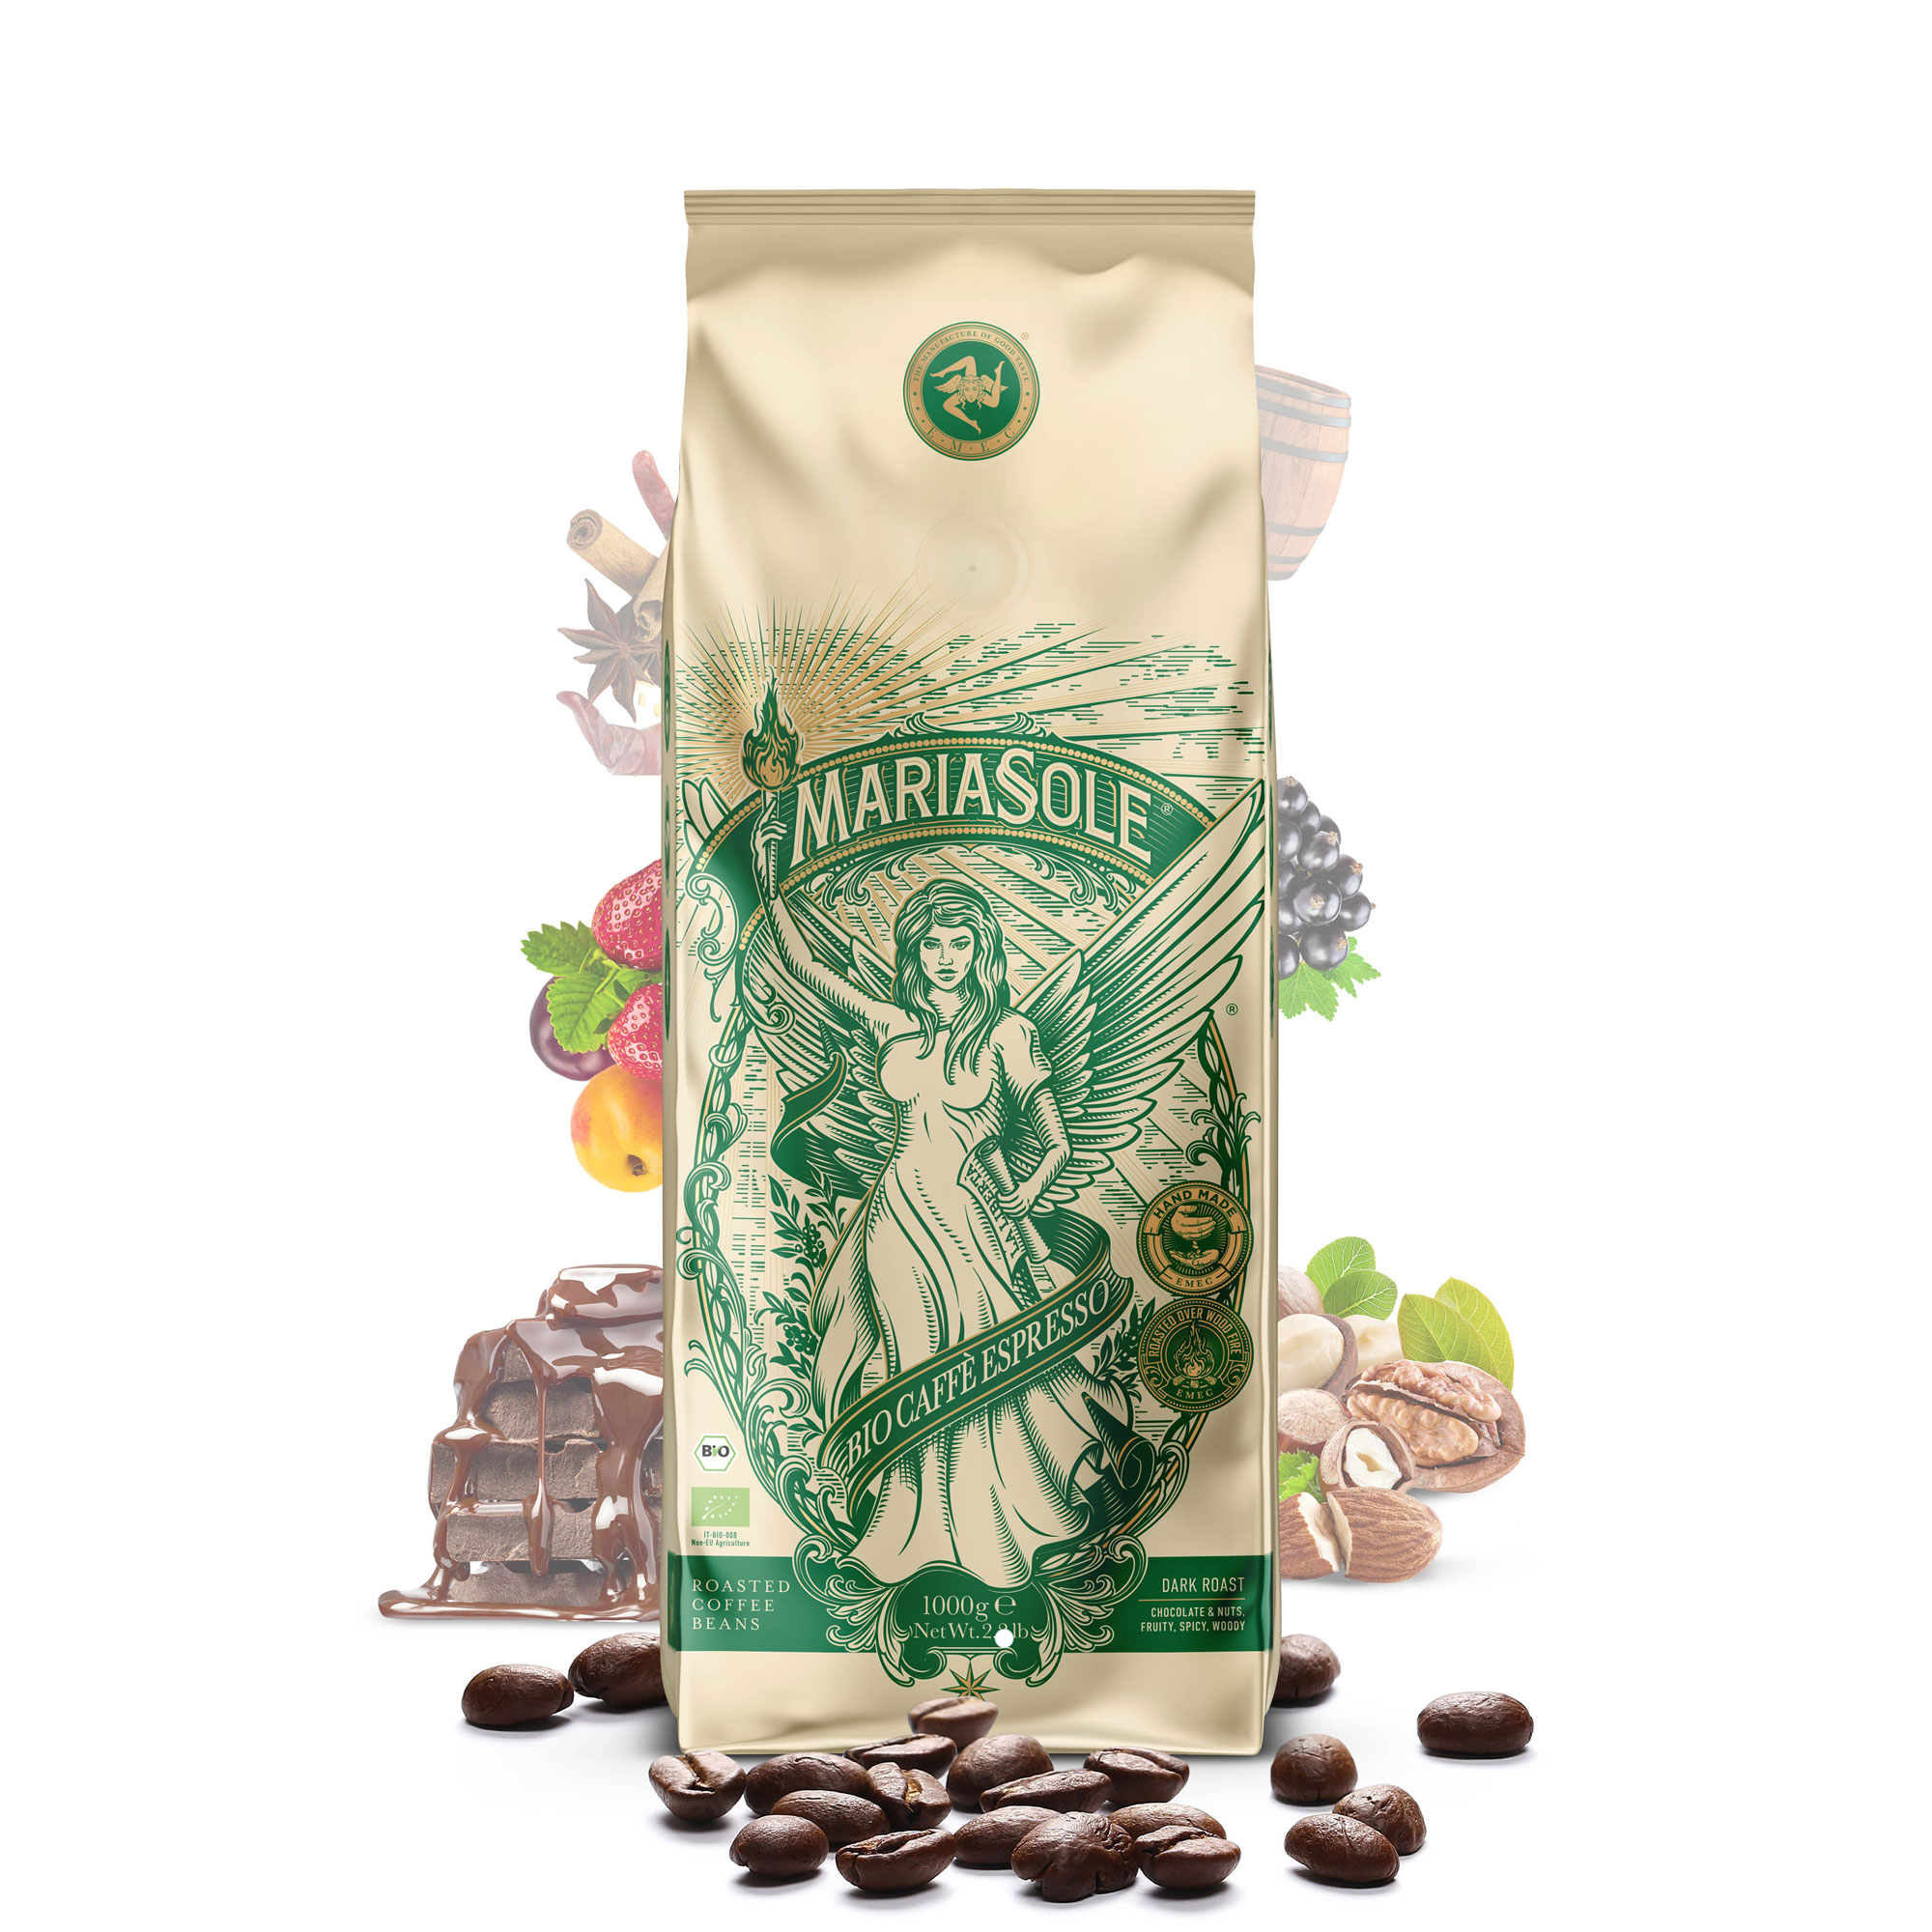 MARIASOLE - Organic Caffè Espresso - 1000g - Beans